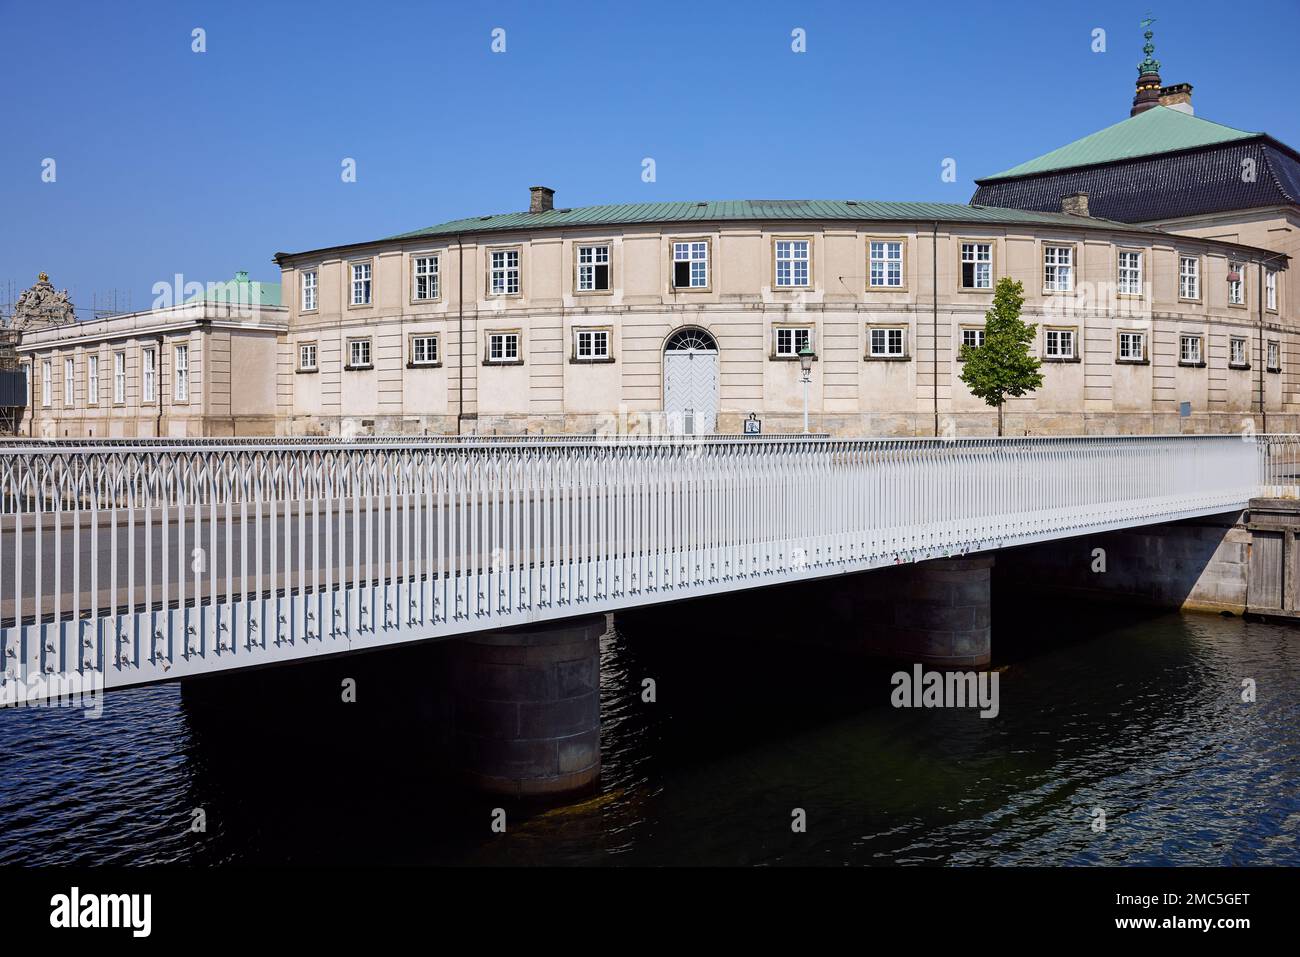 Prinsens Bro (The Prince's Bridge), between Tøjhusgade and Ny Kongensgade, designed by Gottlieb Paludan Architects, 2017; Copenhagen, Denmark Stock Photo